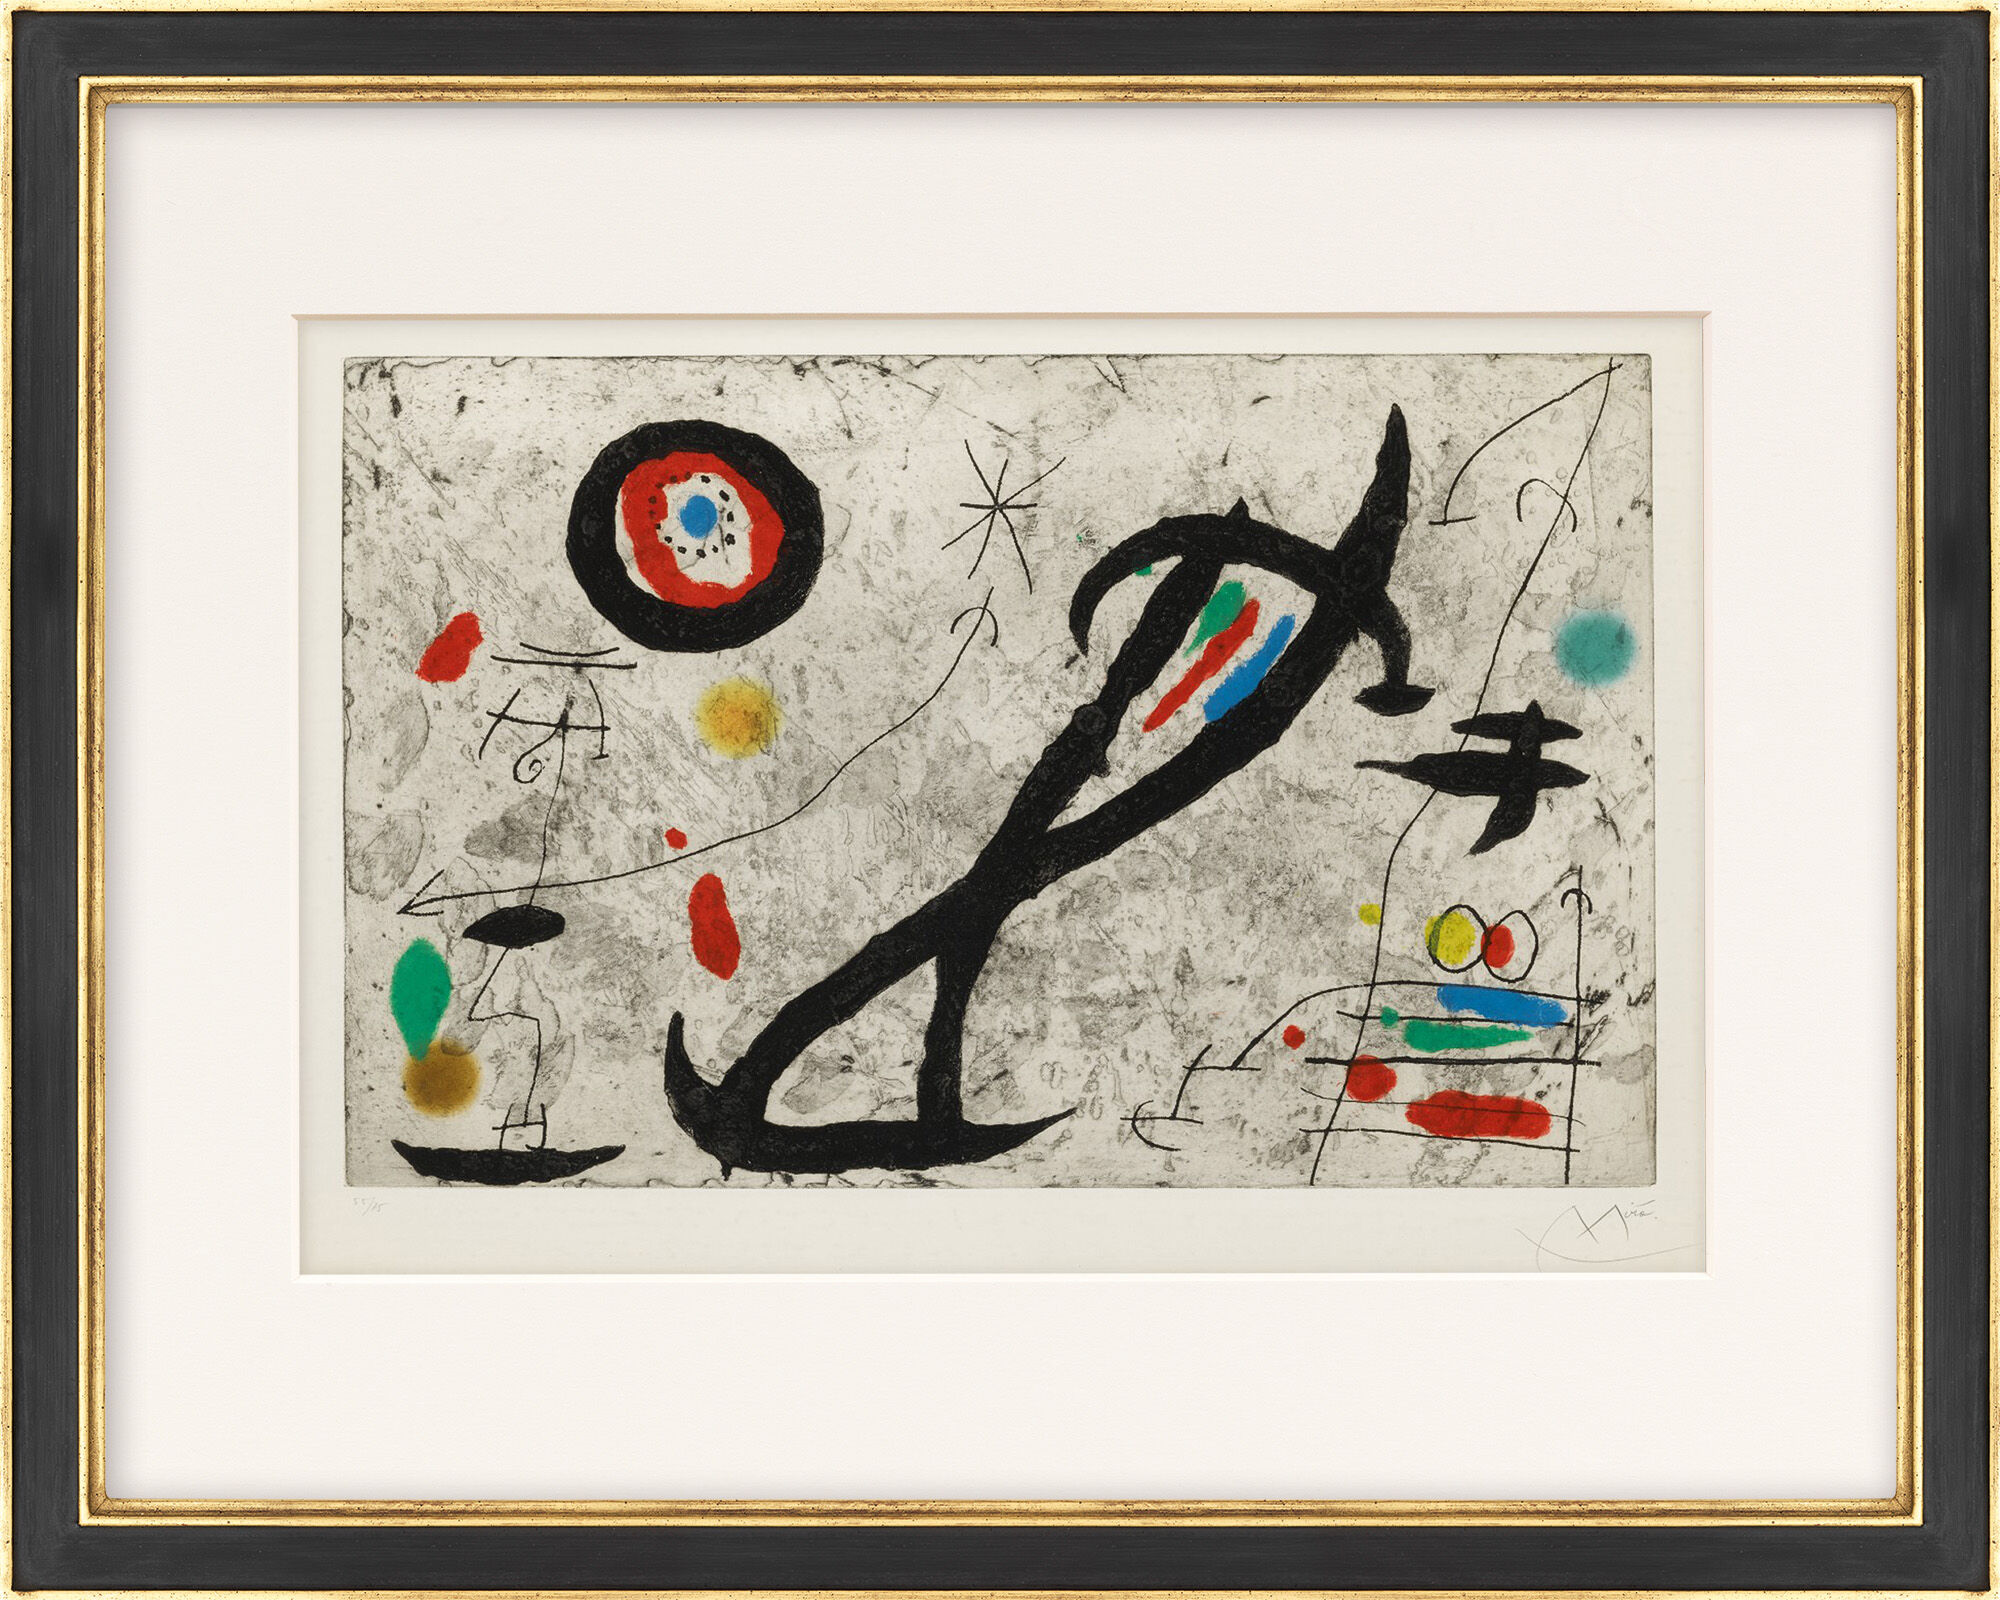 Bild "Tracé sur la paroi V" (1967) von Joan Miró